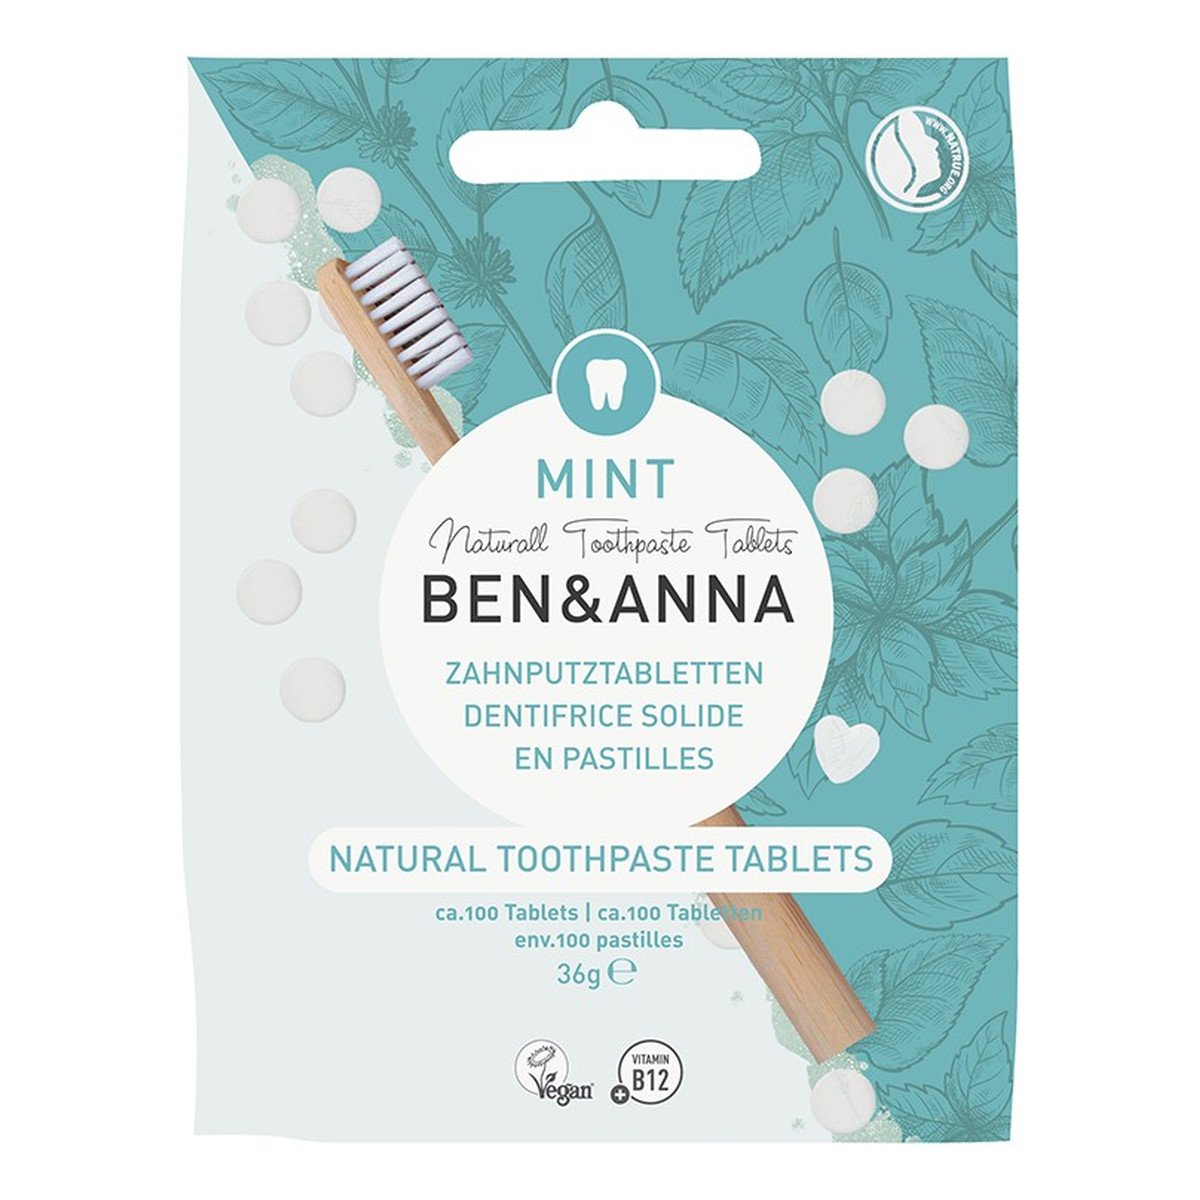 Ben&Anna Natural toothpaste tablets naturalne tabletki do mycia zębów bez fluoru 36g